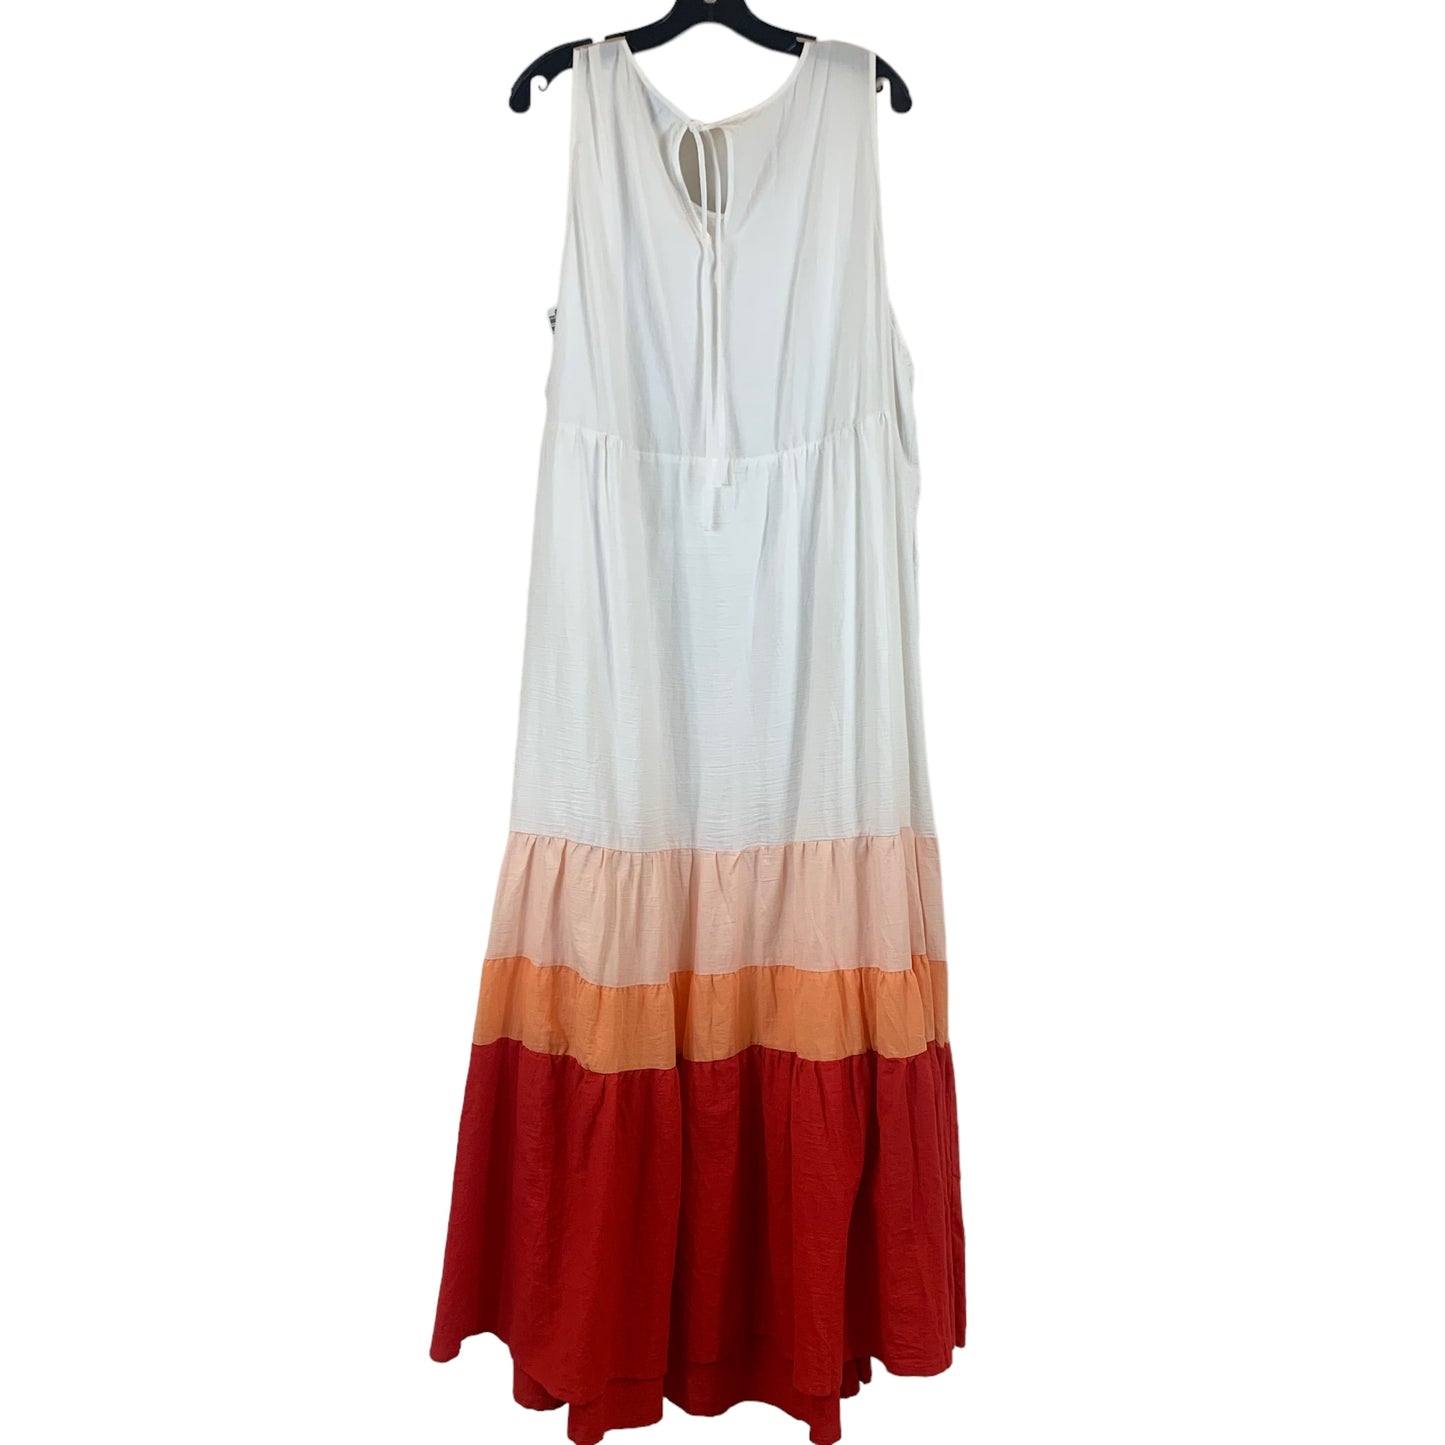 Dress Casual Maxi By Ava & Viv  Size: 4x